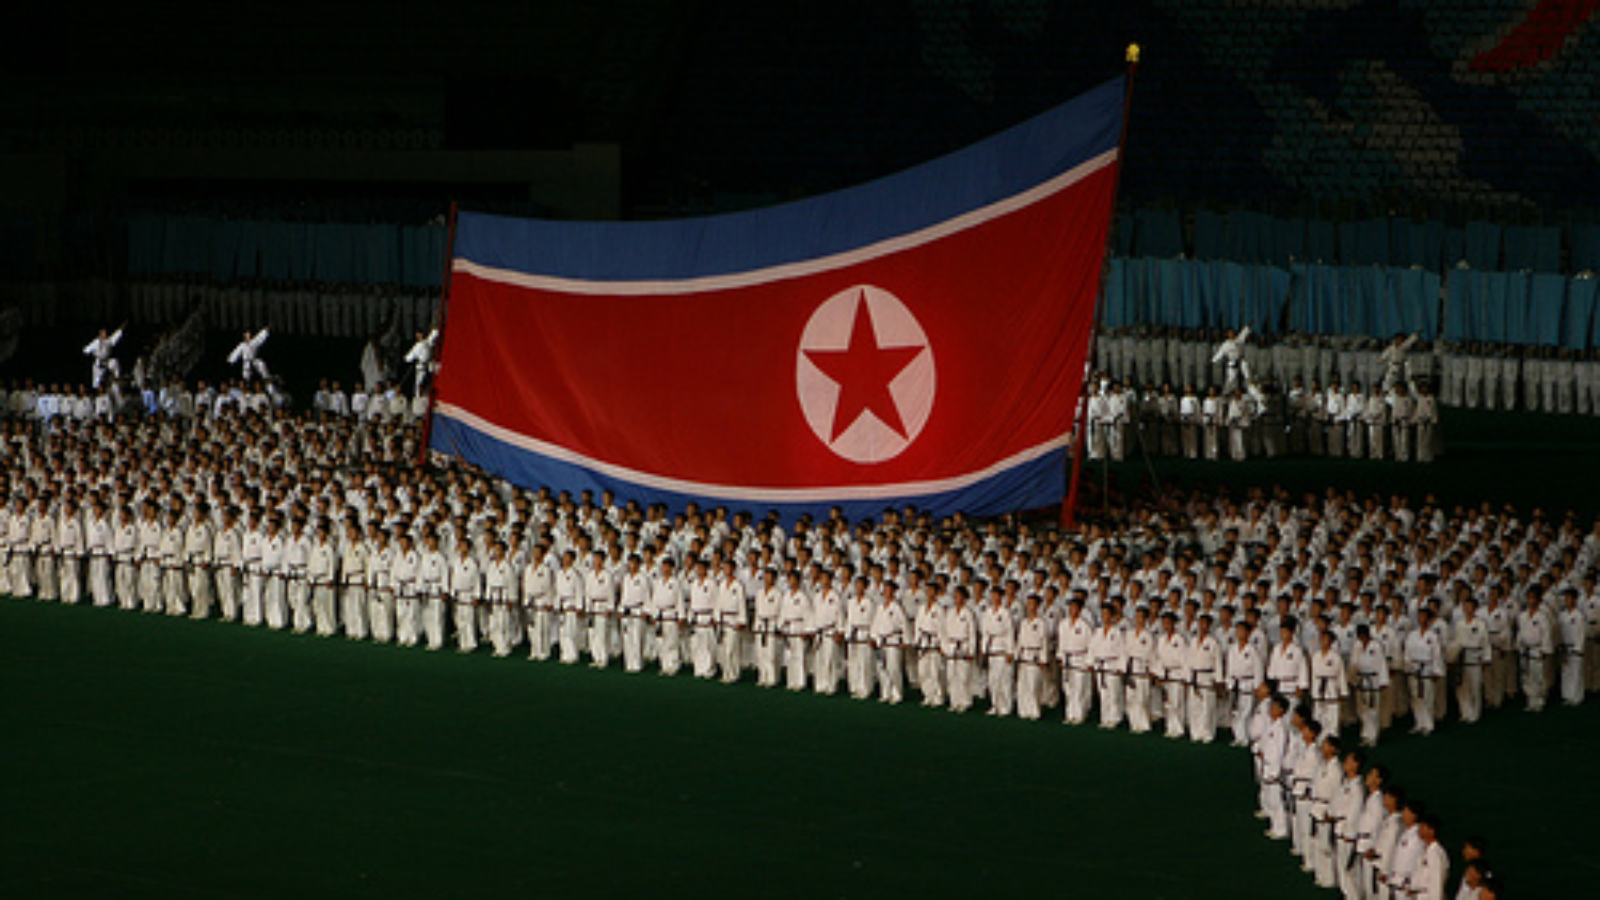 Korea-flag-and-people